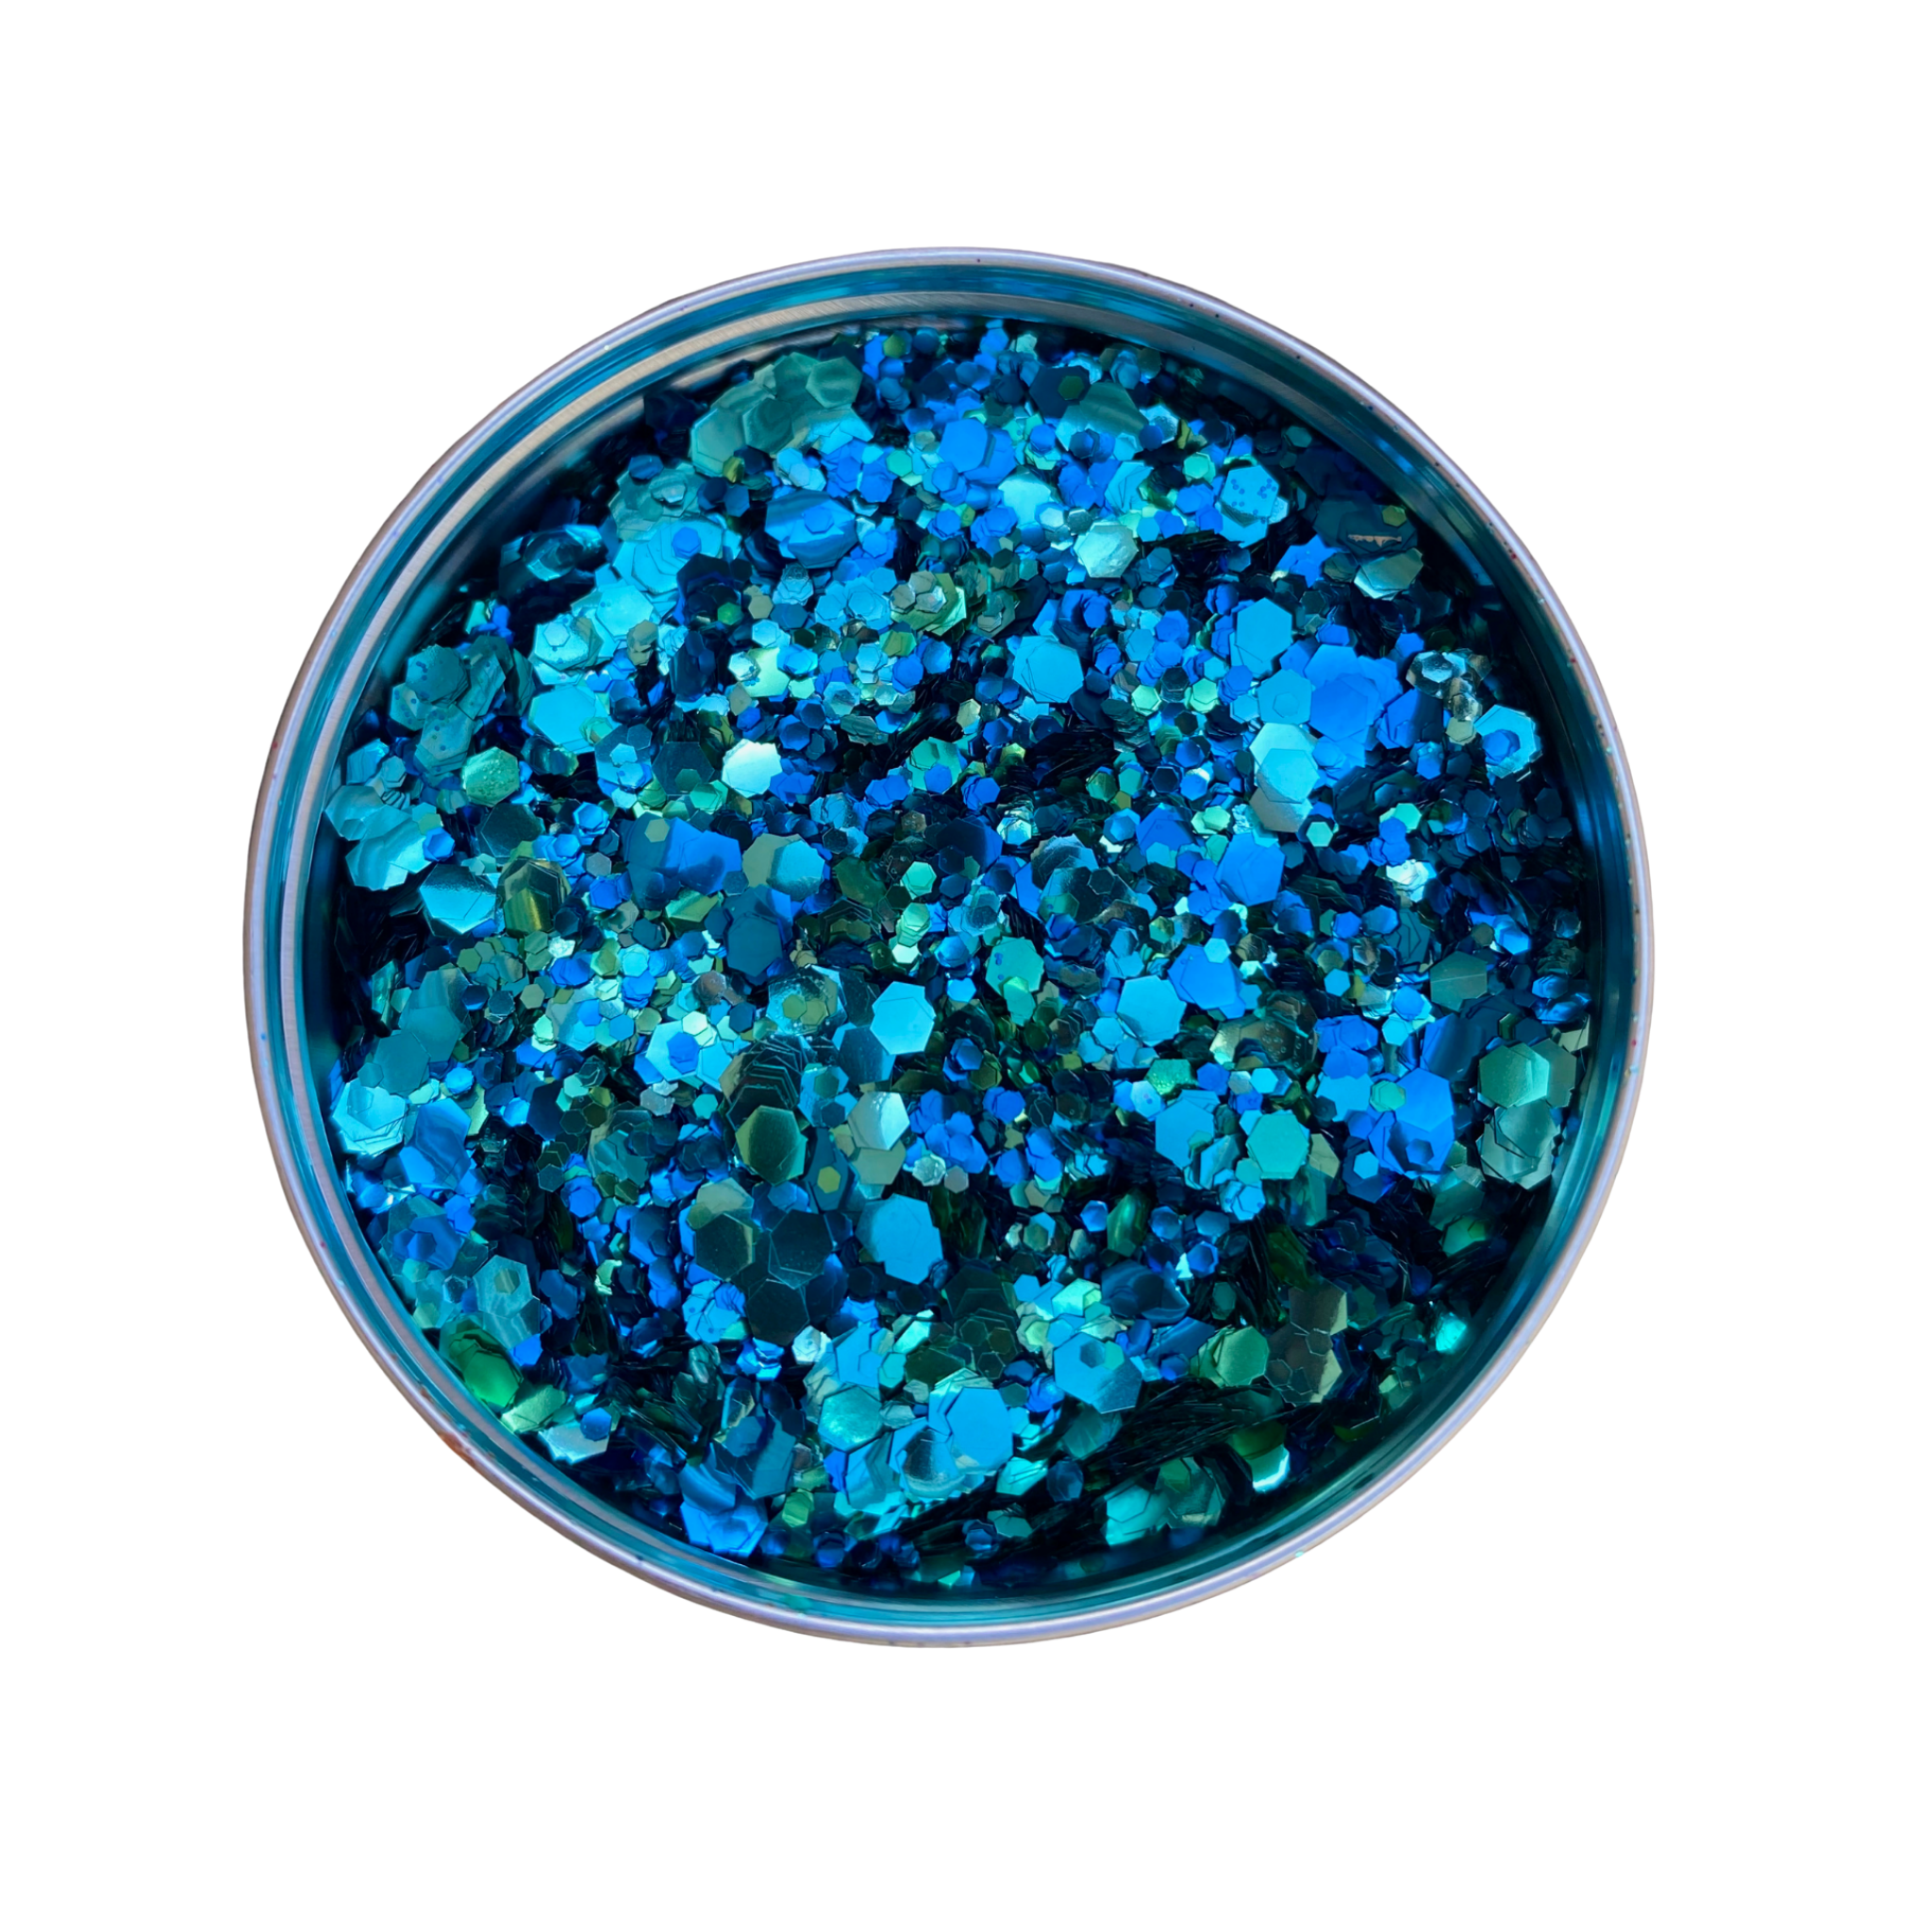 Ocean glitter blend of biodegradable glitter by Luminosity Glitter. Green and blue cosmetic glitters in an aluminium tin